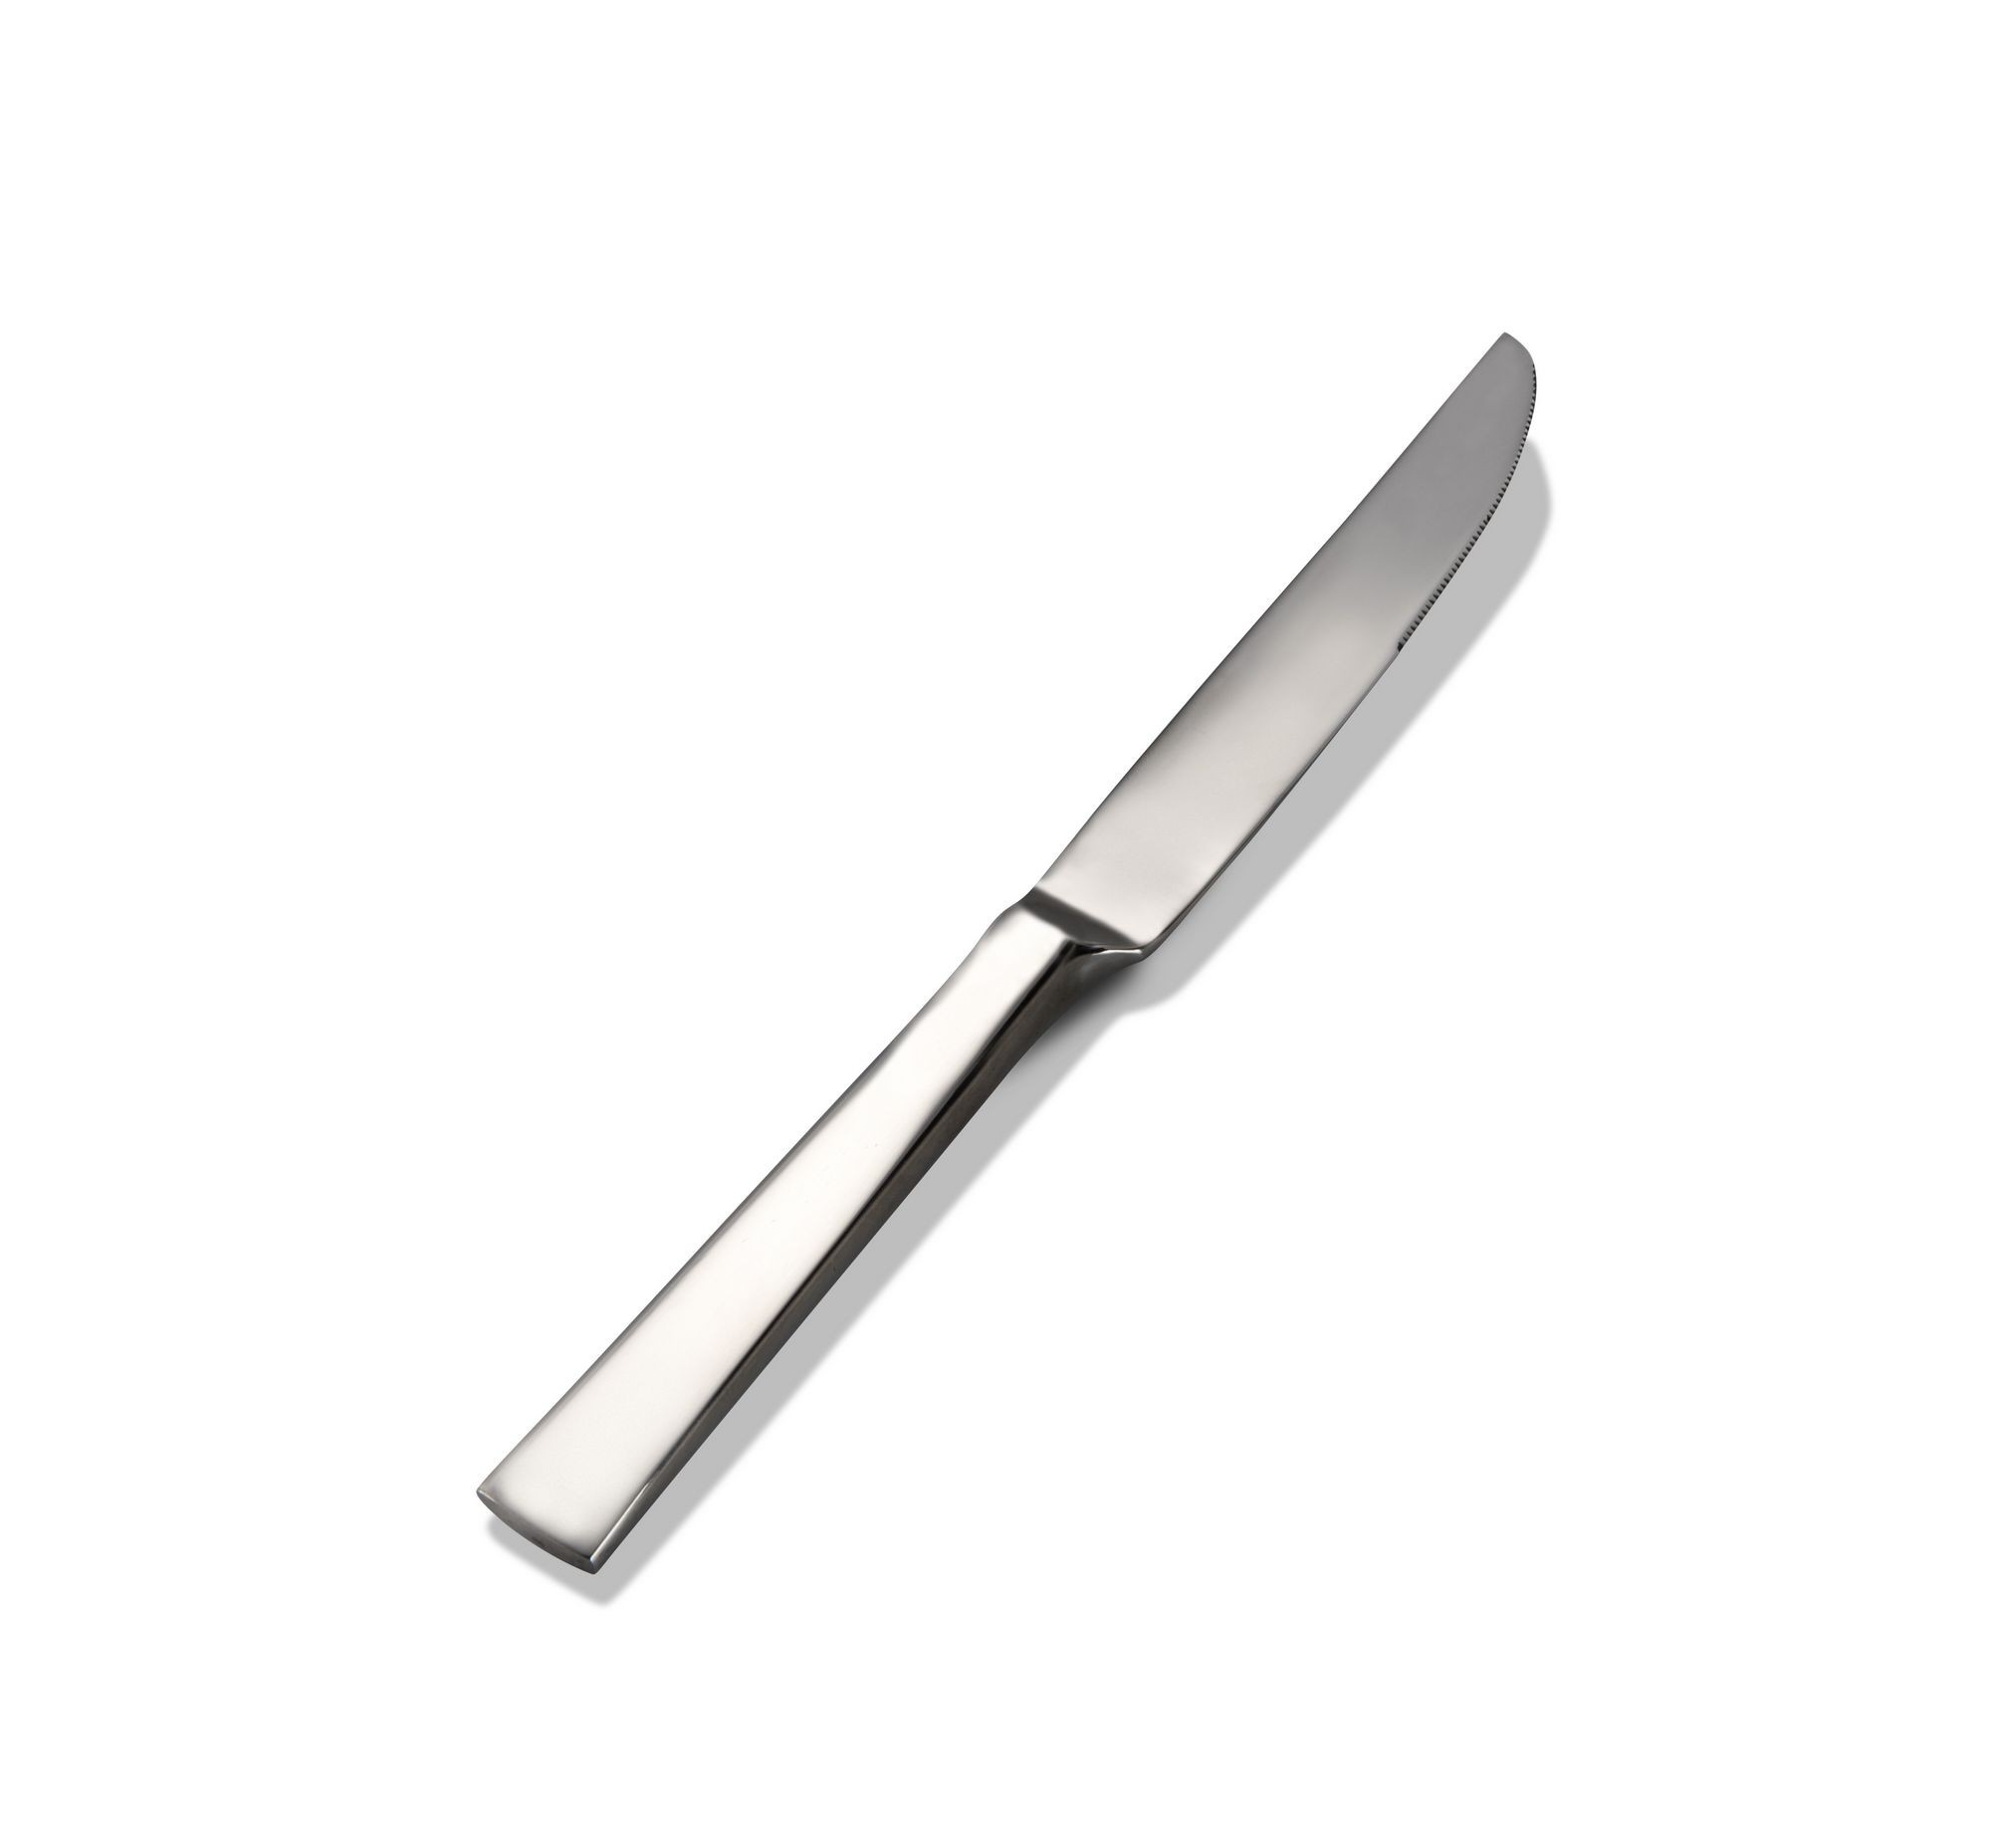 Bon Chef S3718 Roman 18/8 Stainless Steel Dessert Knife